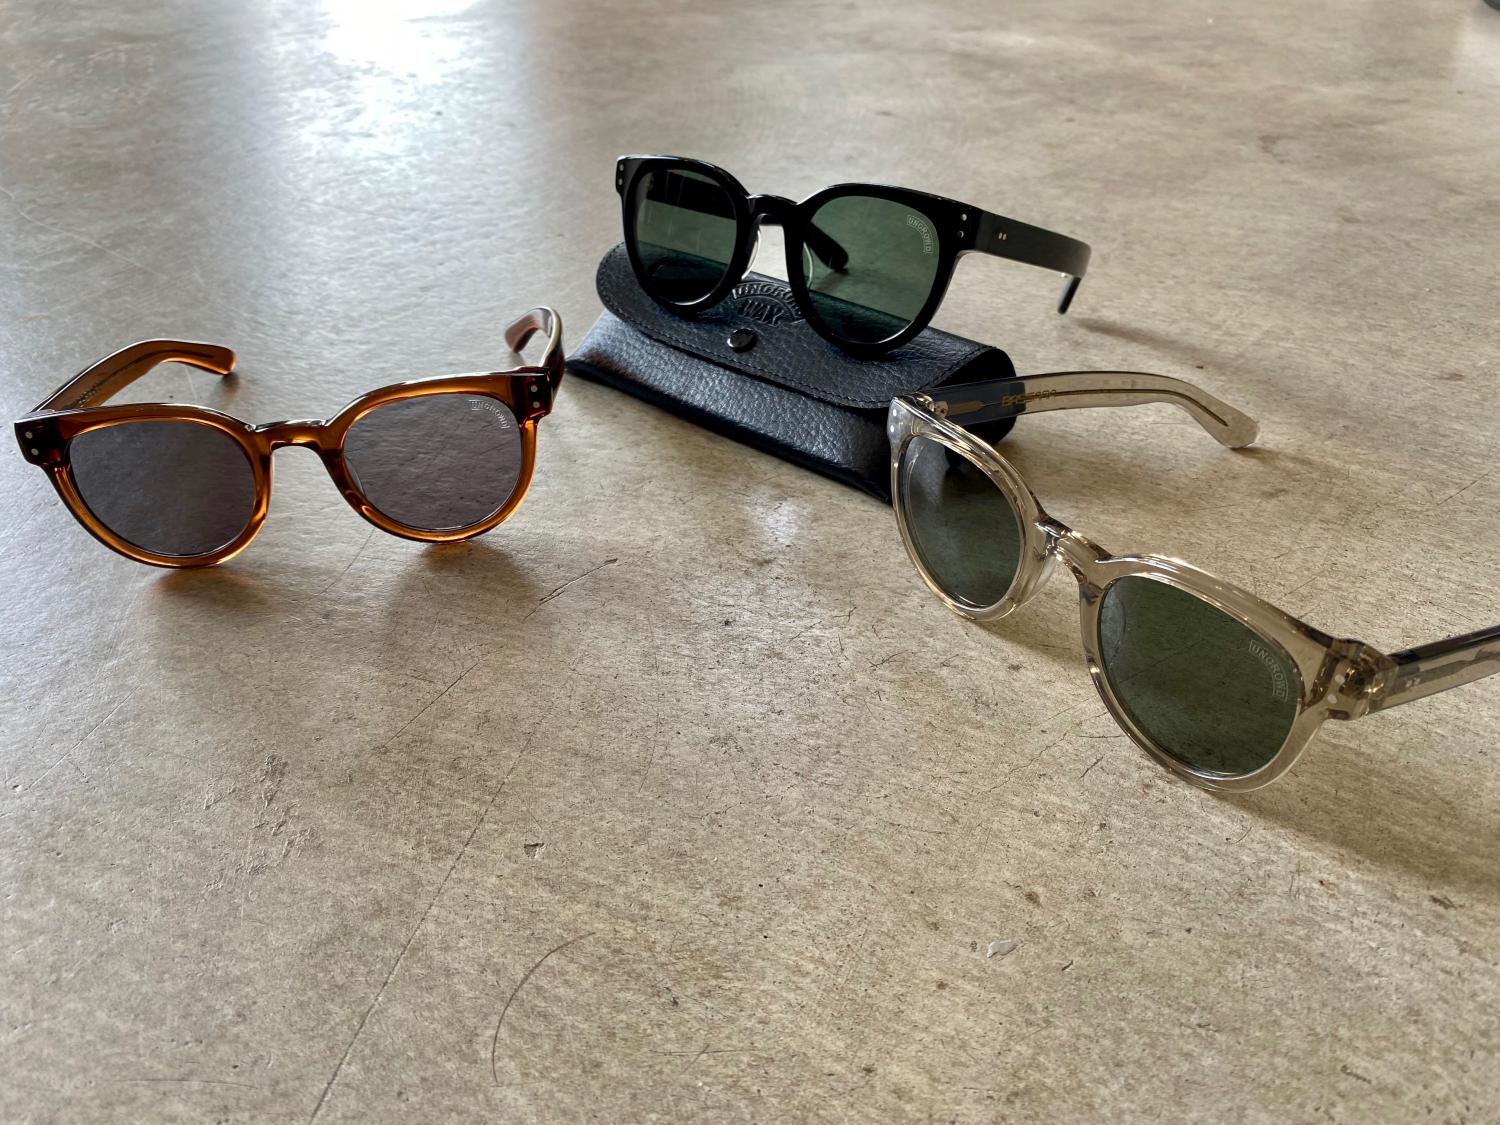 UNCROWD×WAX collaboration sunglasses in stock